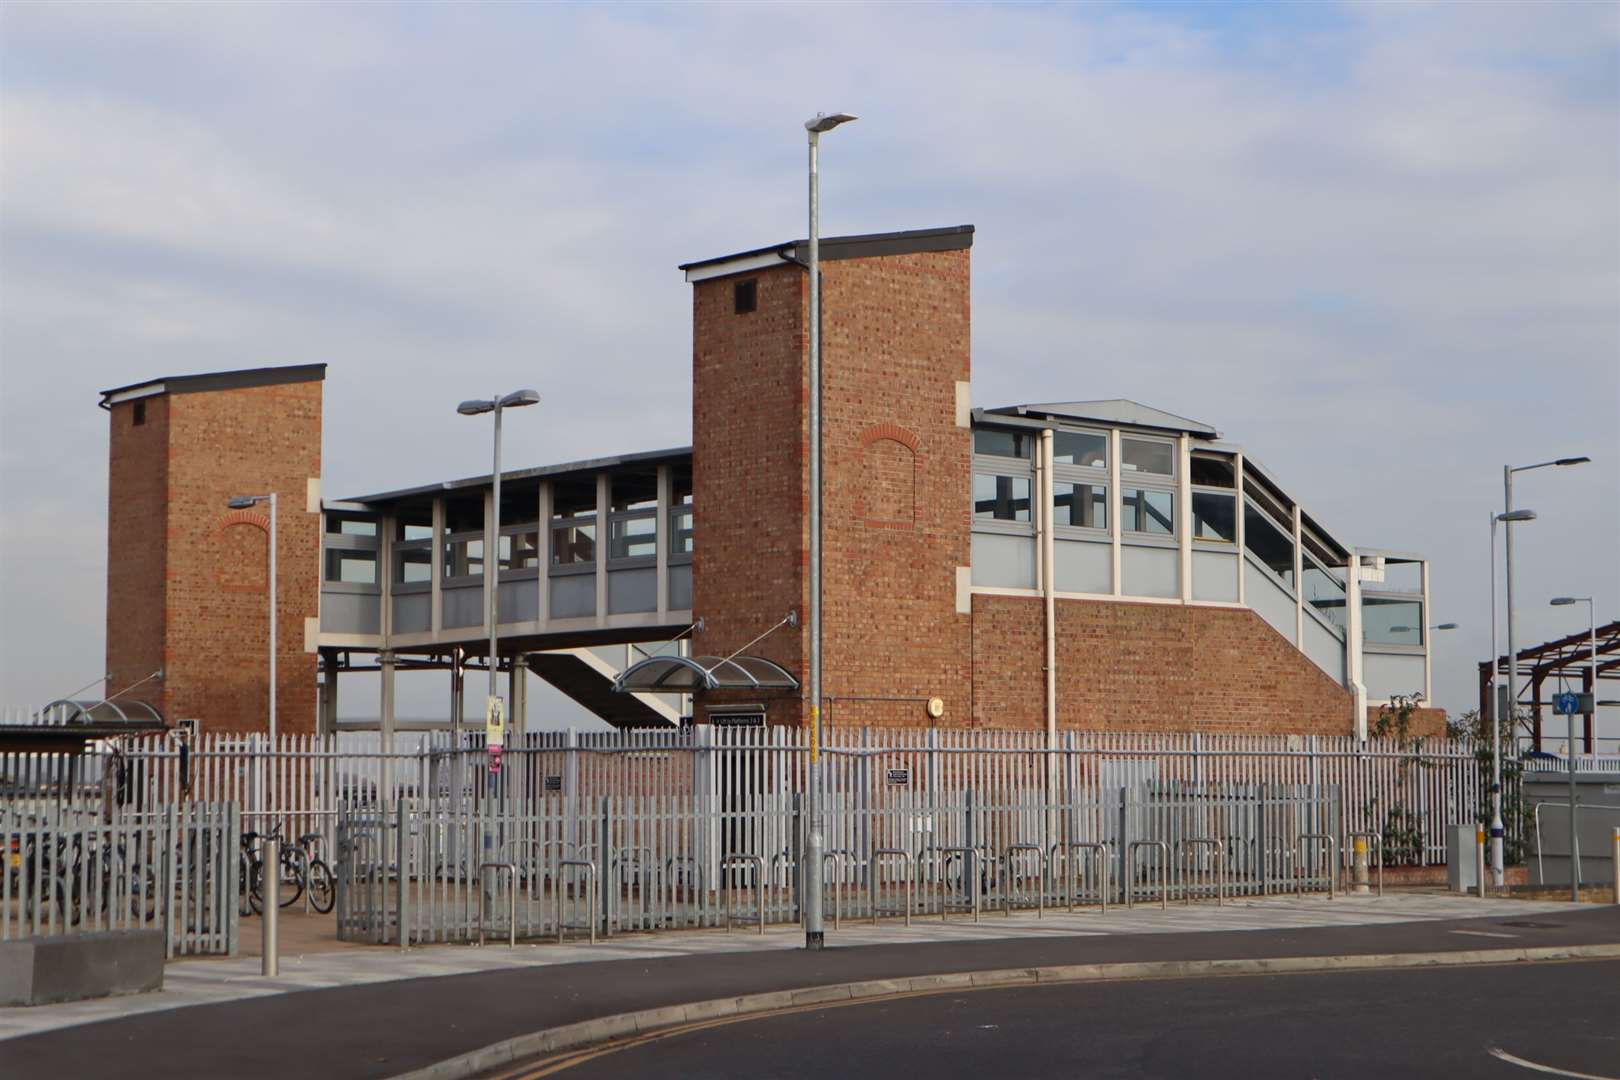 The new pedestrian bridge at Sittingbourne railway station